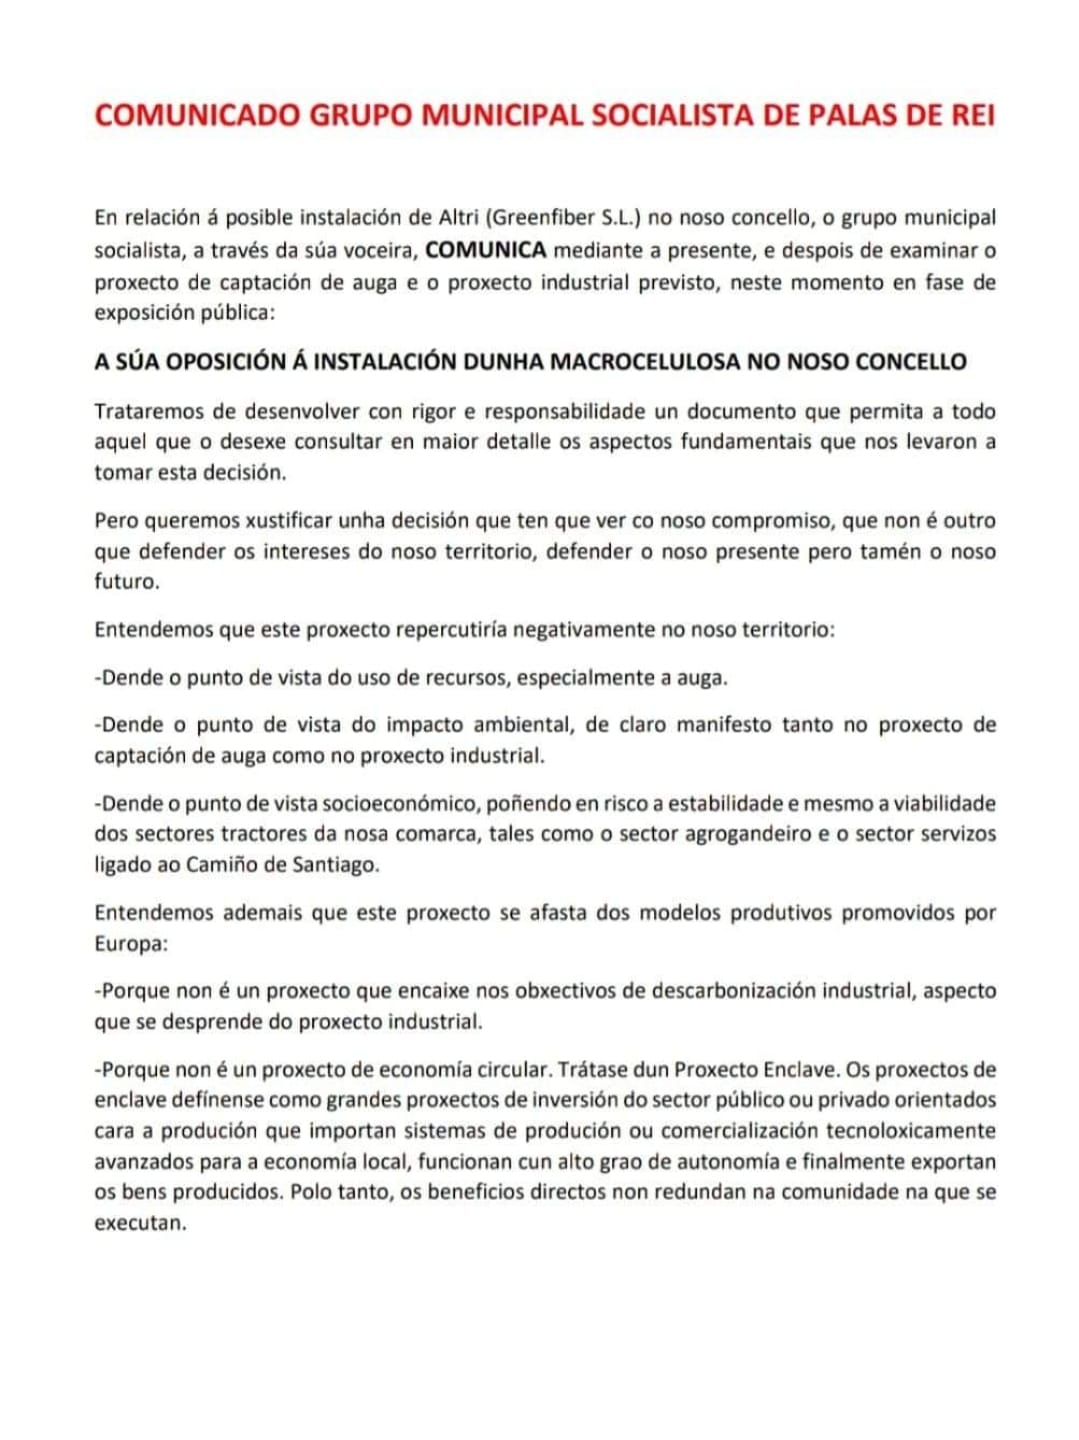 Manifiesto xontra Altri, grupo socialista de Palas de Rei (1)